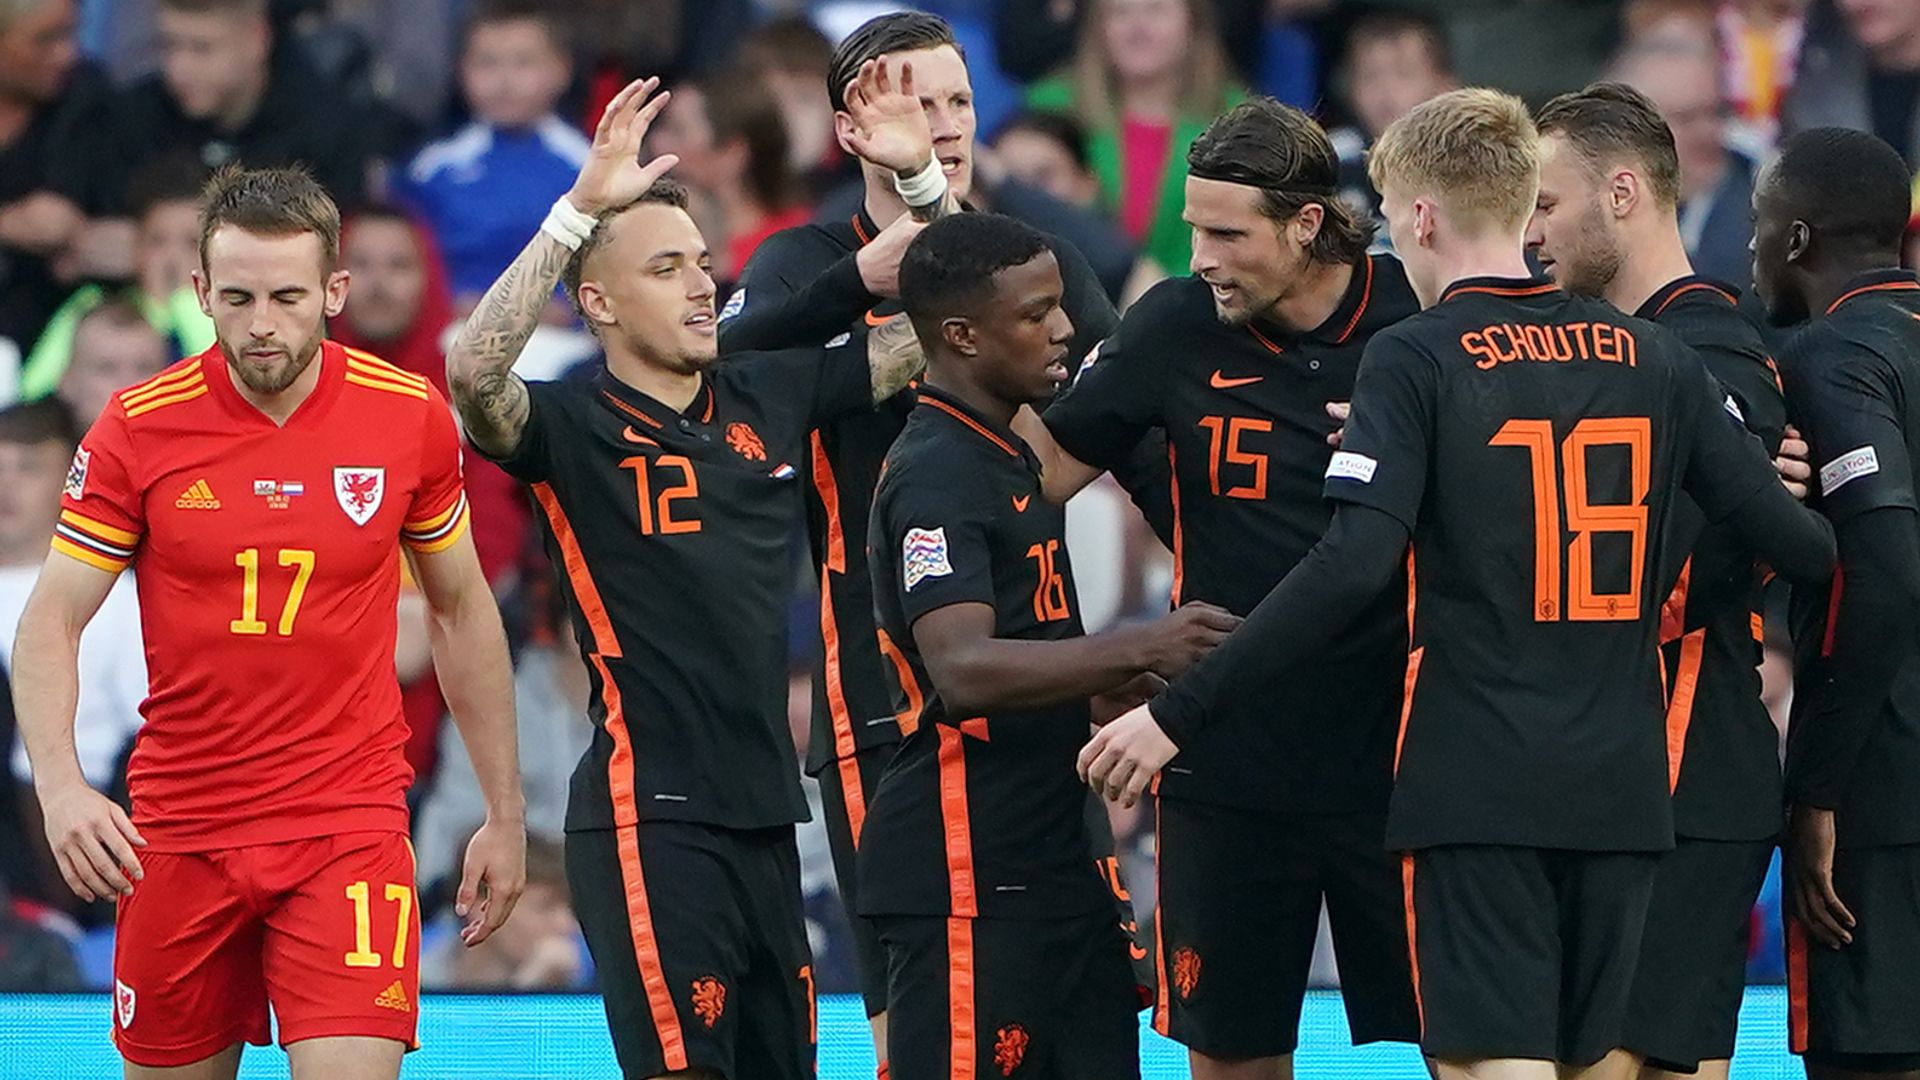 Wales 1-2 Netherlands: Wout Weghorst ends Welsh unbeaten home run in dramatic finale